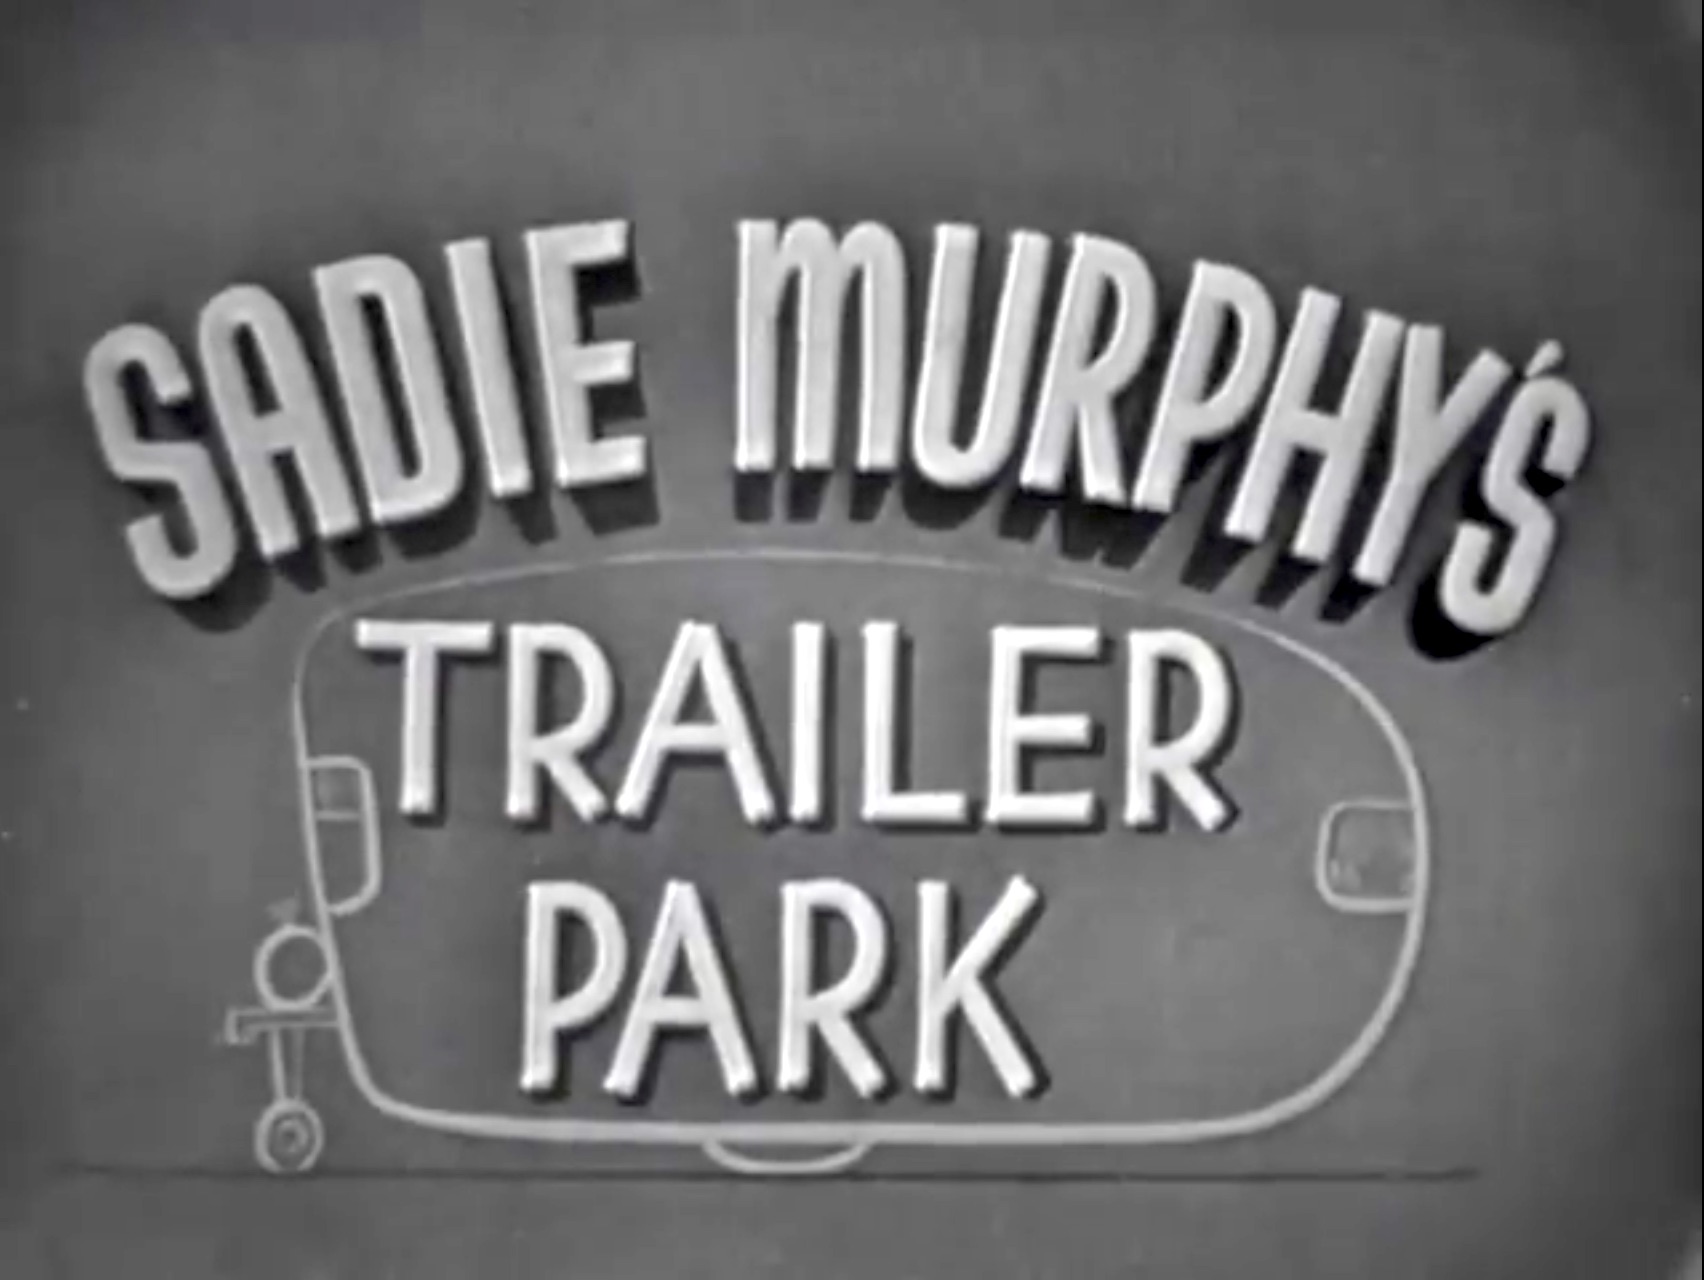 Love Thy Neighbor, aka. Sadie Murphy's Trailer Park - The Red Skelton Show season 4